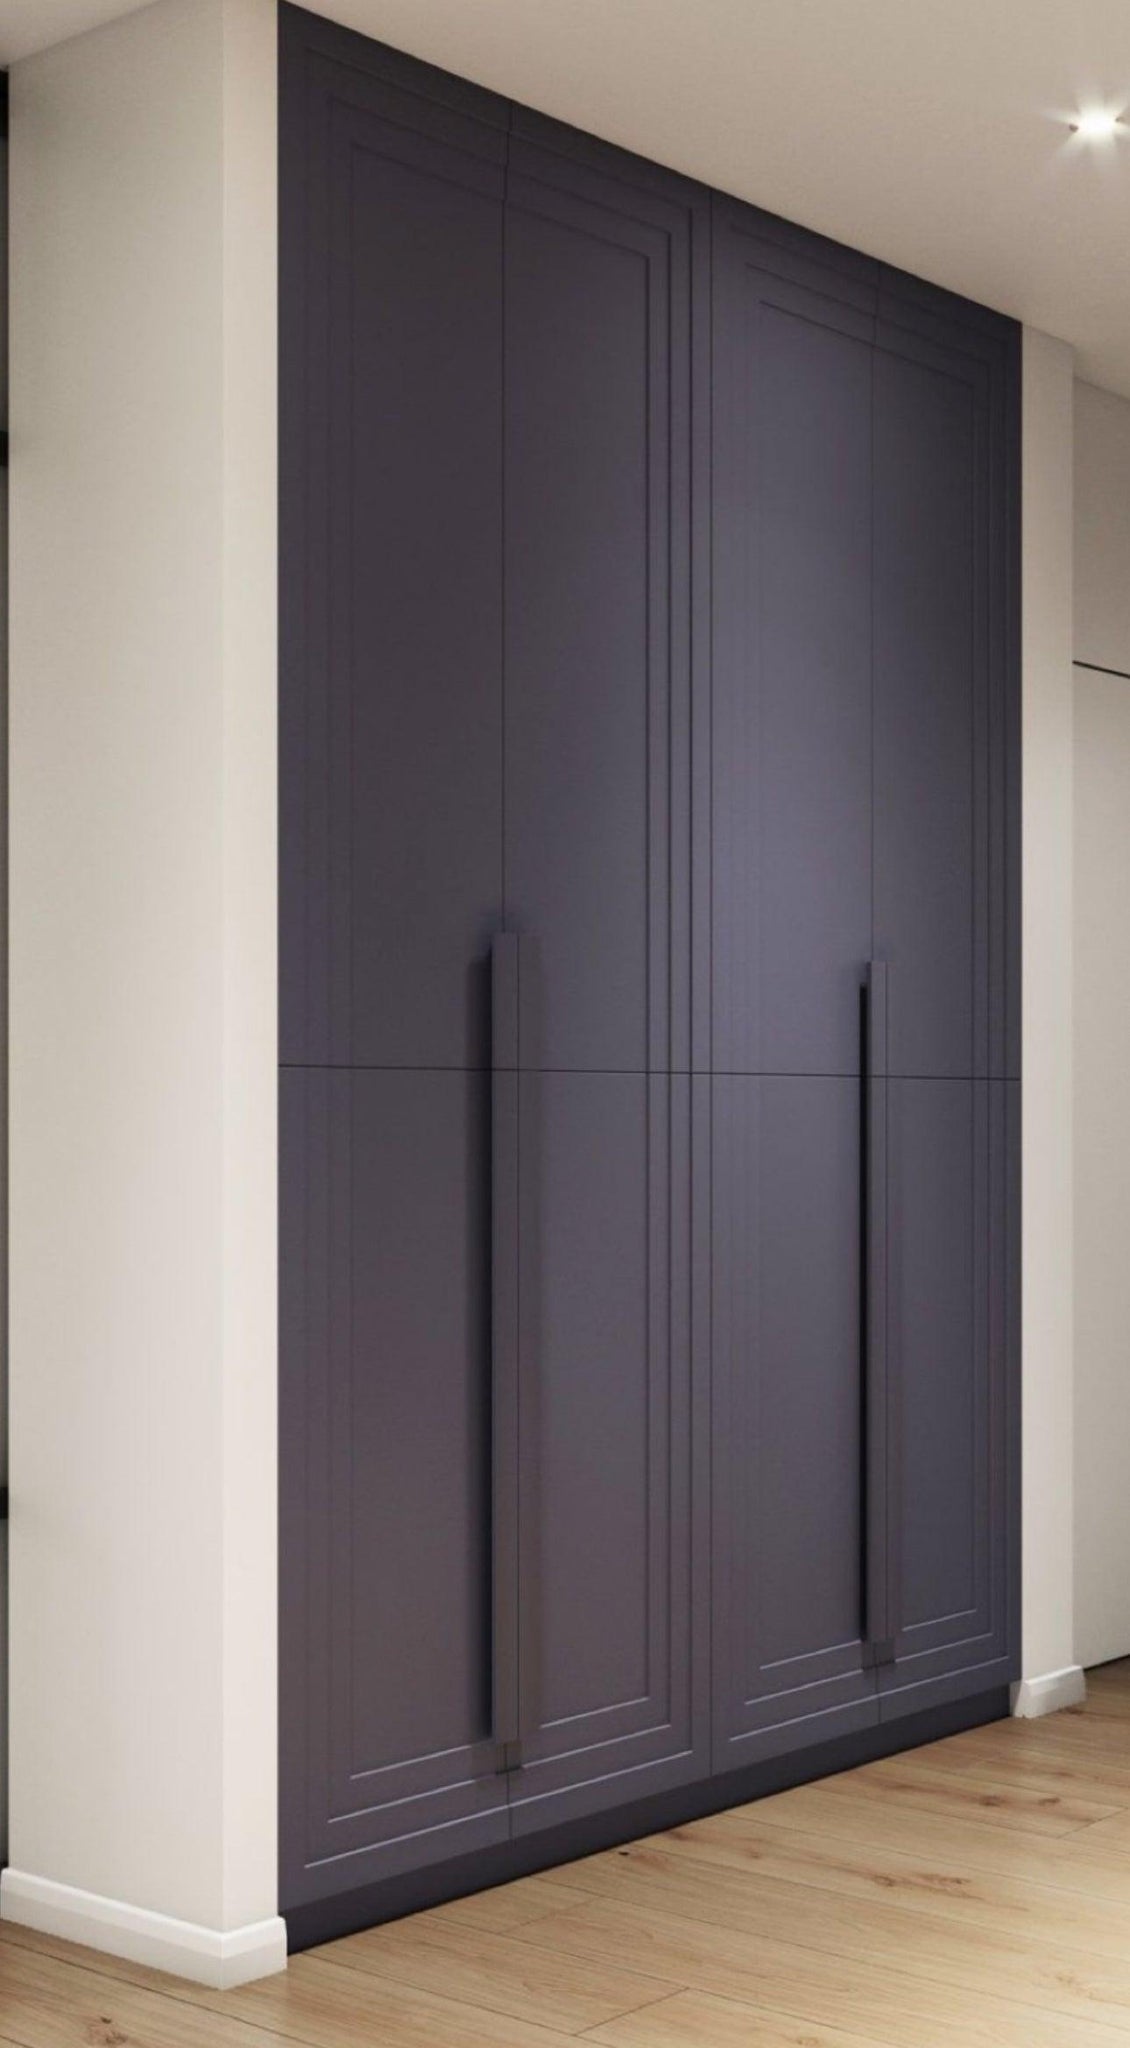 Carbone Design Bi-Fold Doors - Rustic Luxe Designs